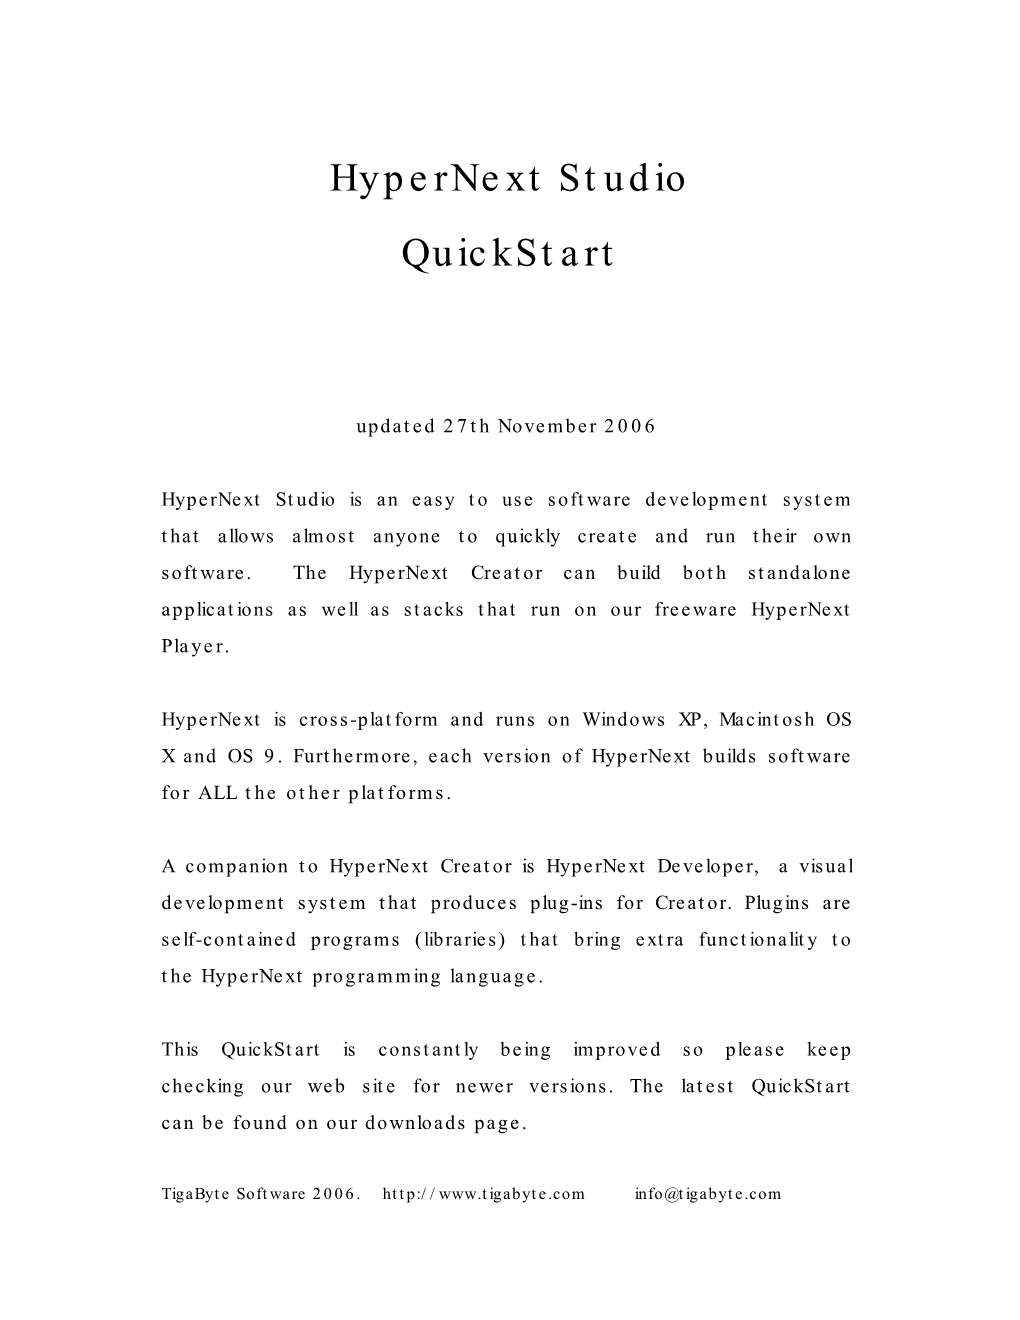 Hypernext Studio Quickstart